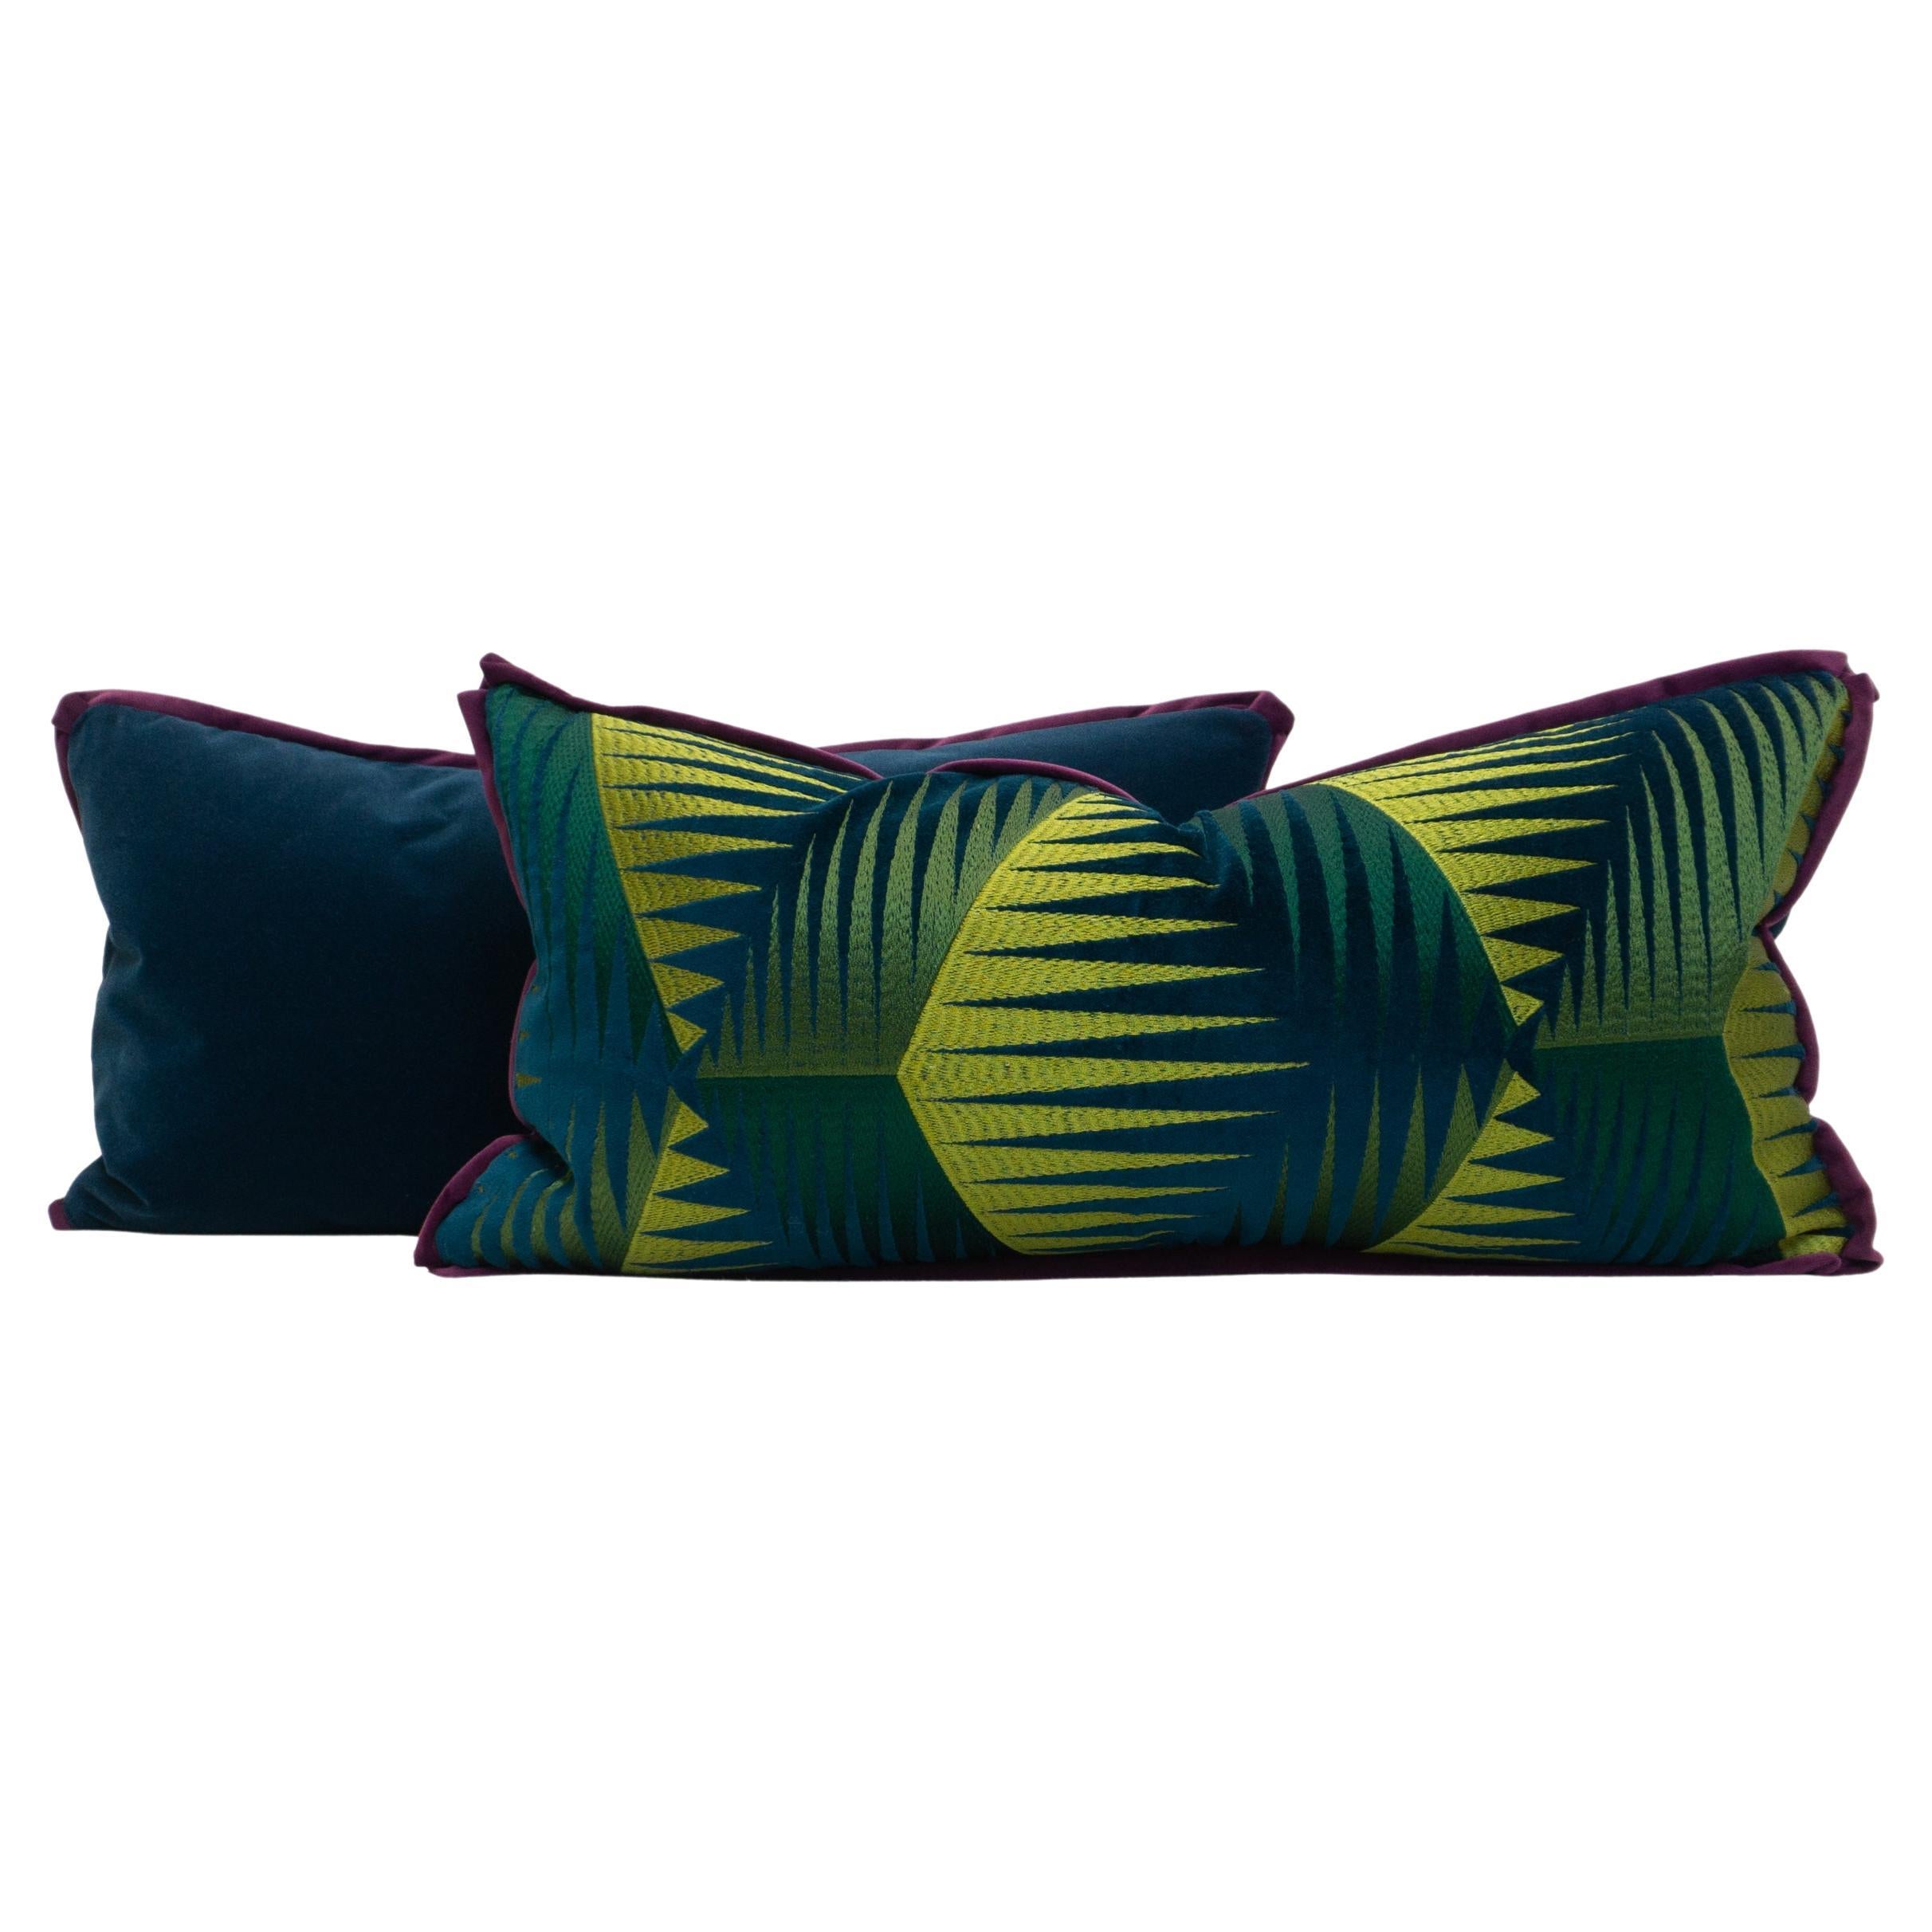 Embroidered Grass Design Blue Navy Velvet Fabric Purple Trim Lumbar Pillows For Sale